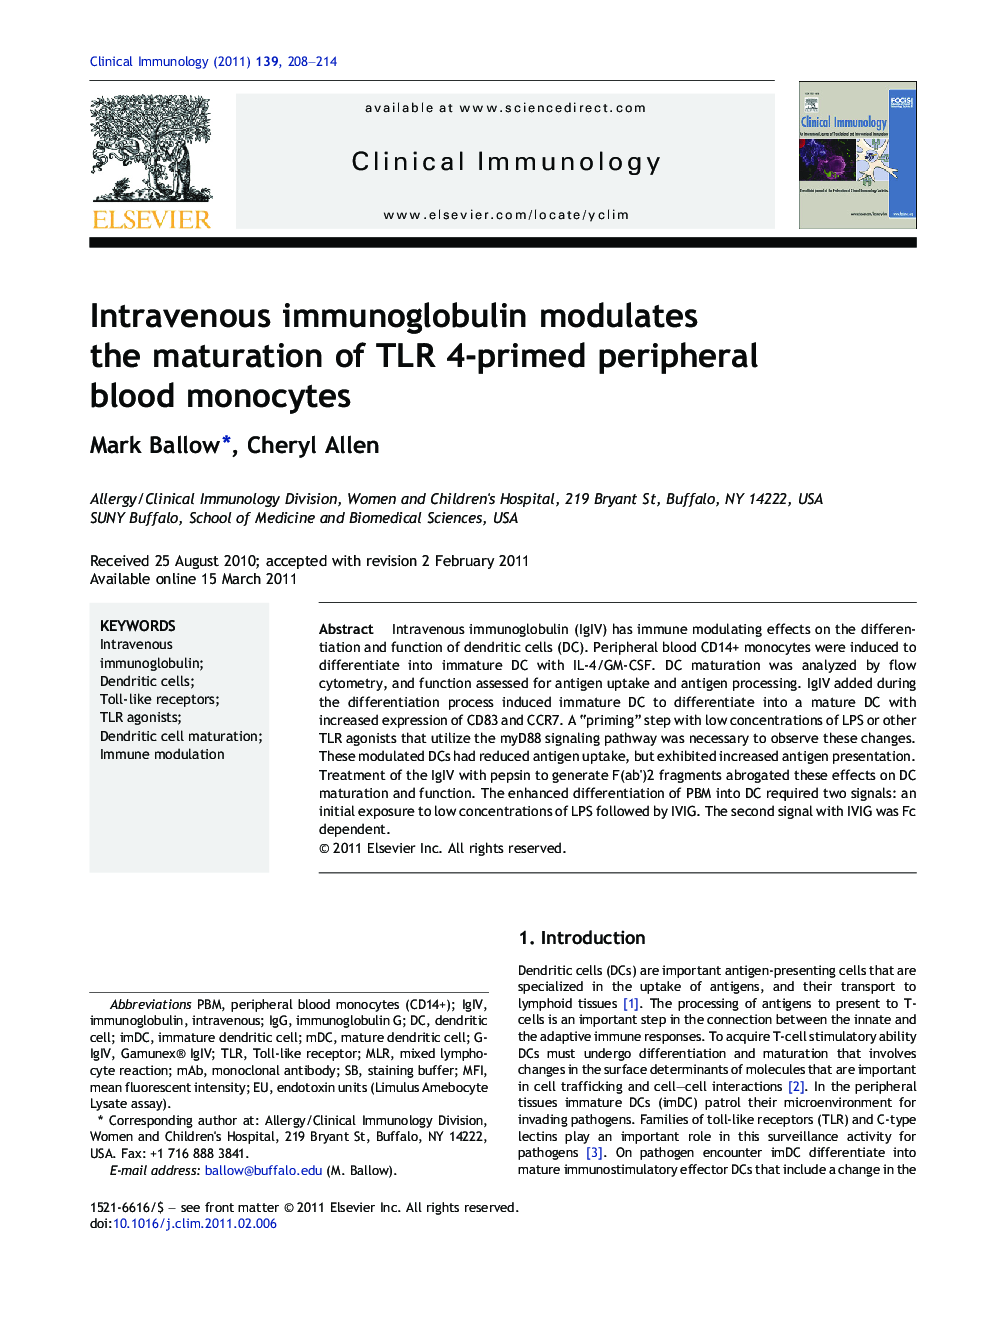 Intravenous immunoglobulin modulates the maturation of TLR 4-primed peripheral blood monocytes